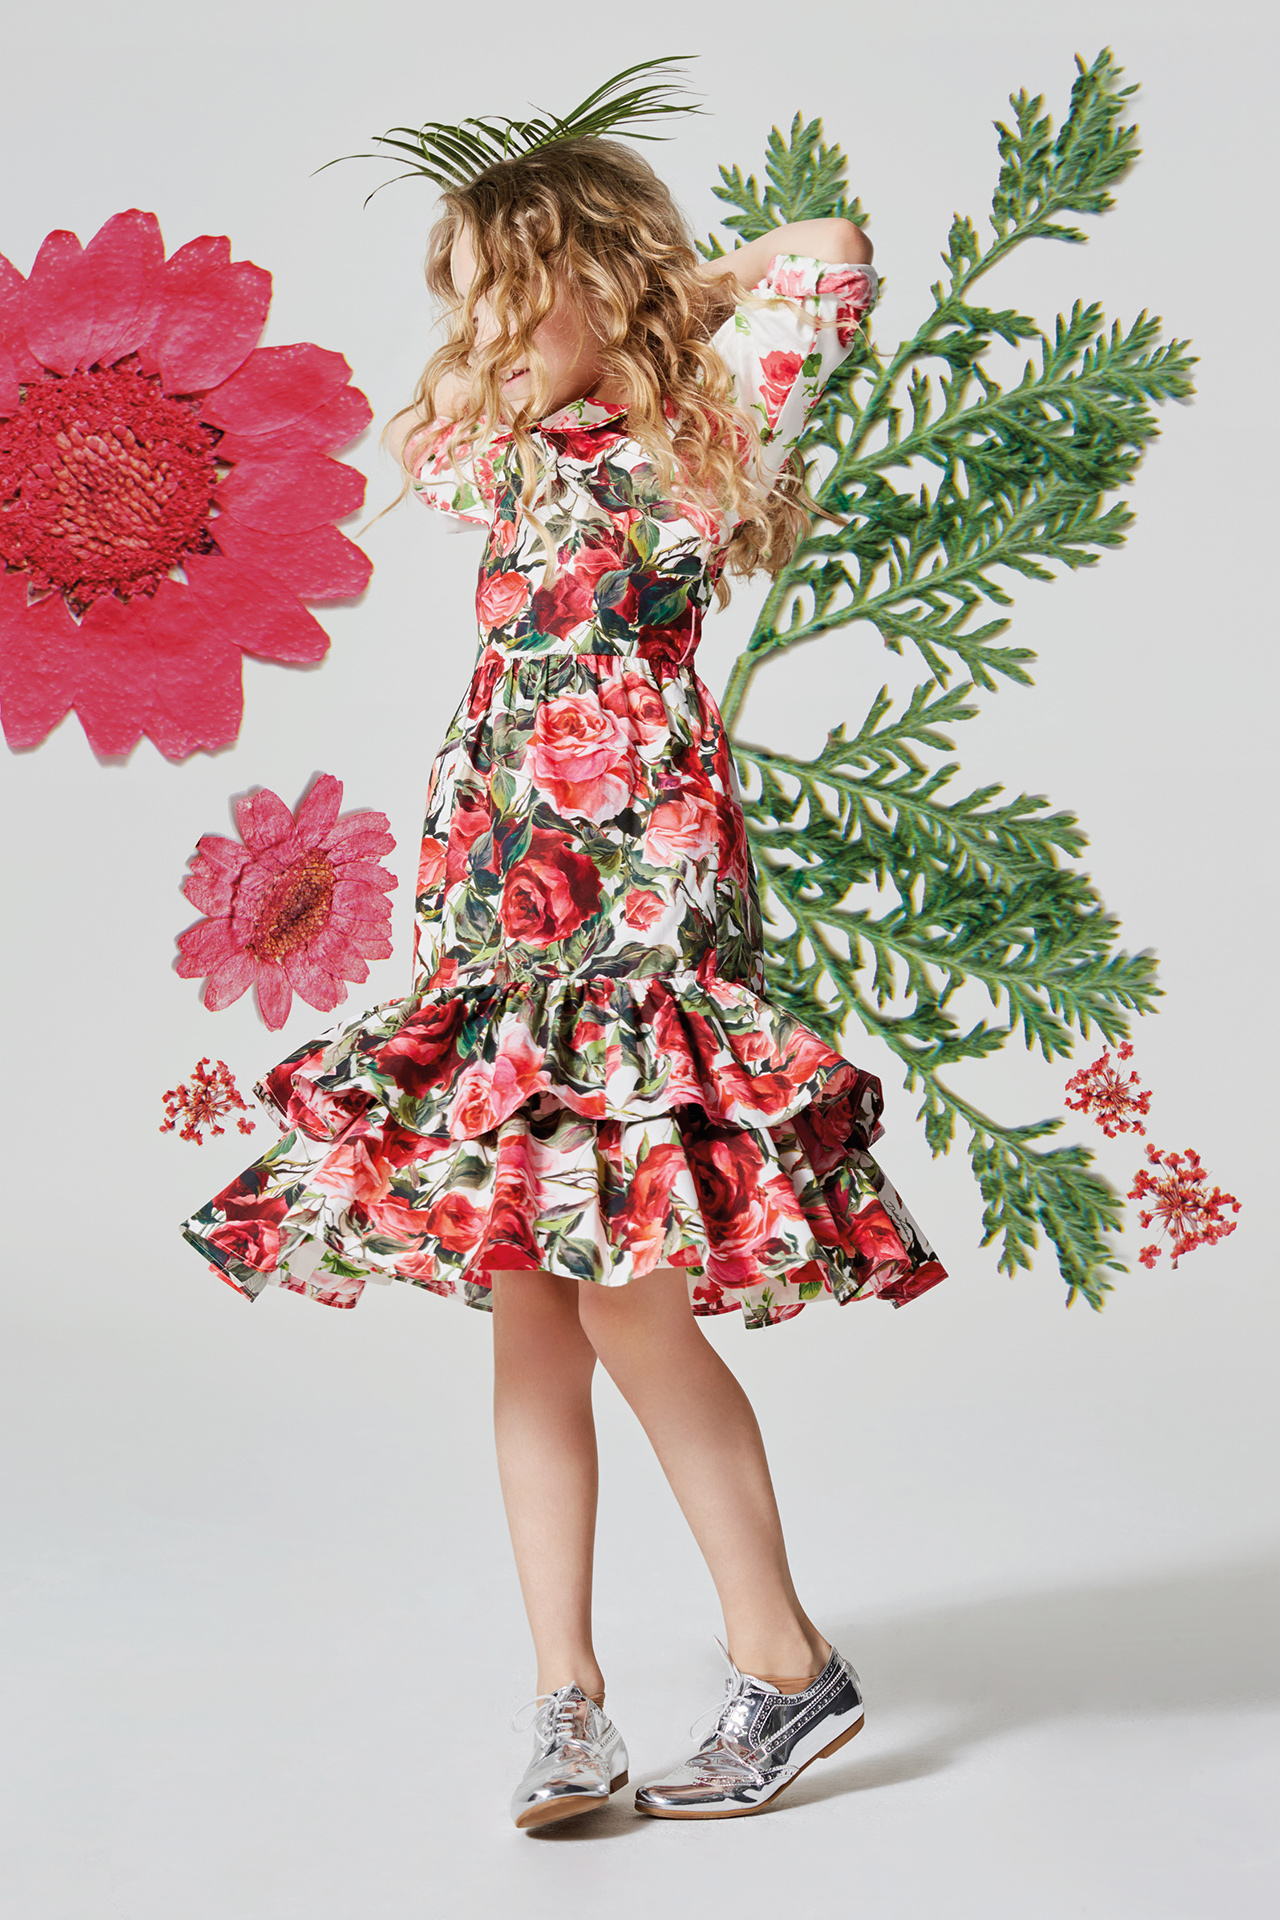 Floral kids fashion girl 9 Emma Tunbridge